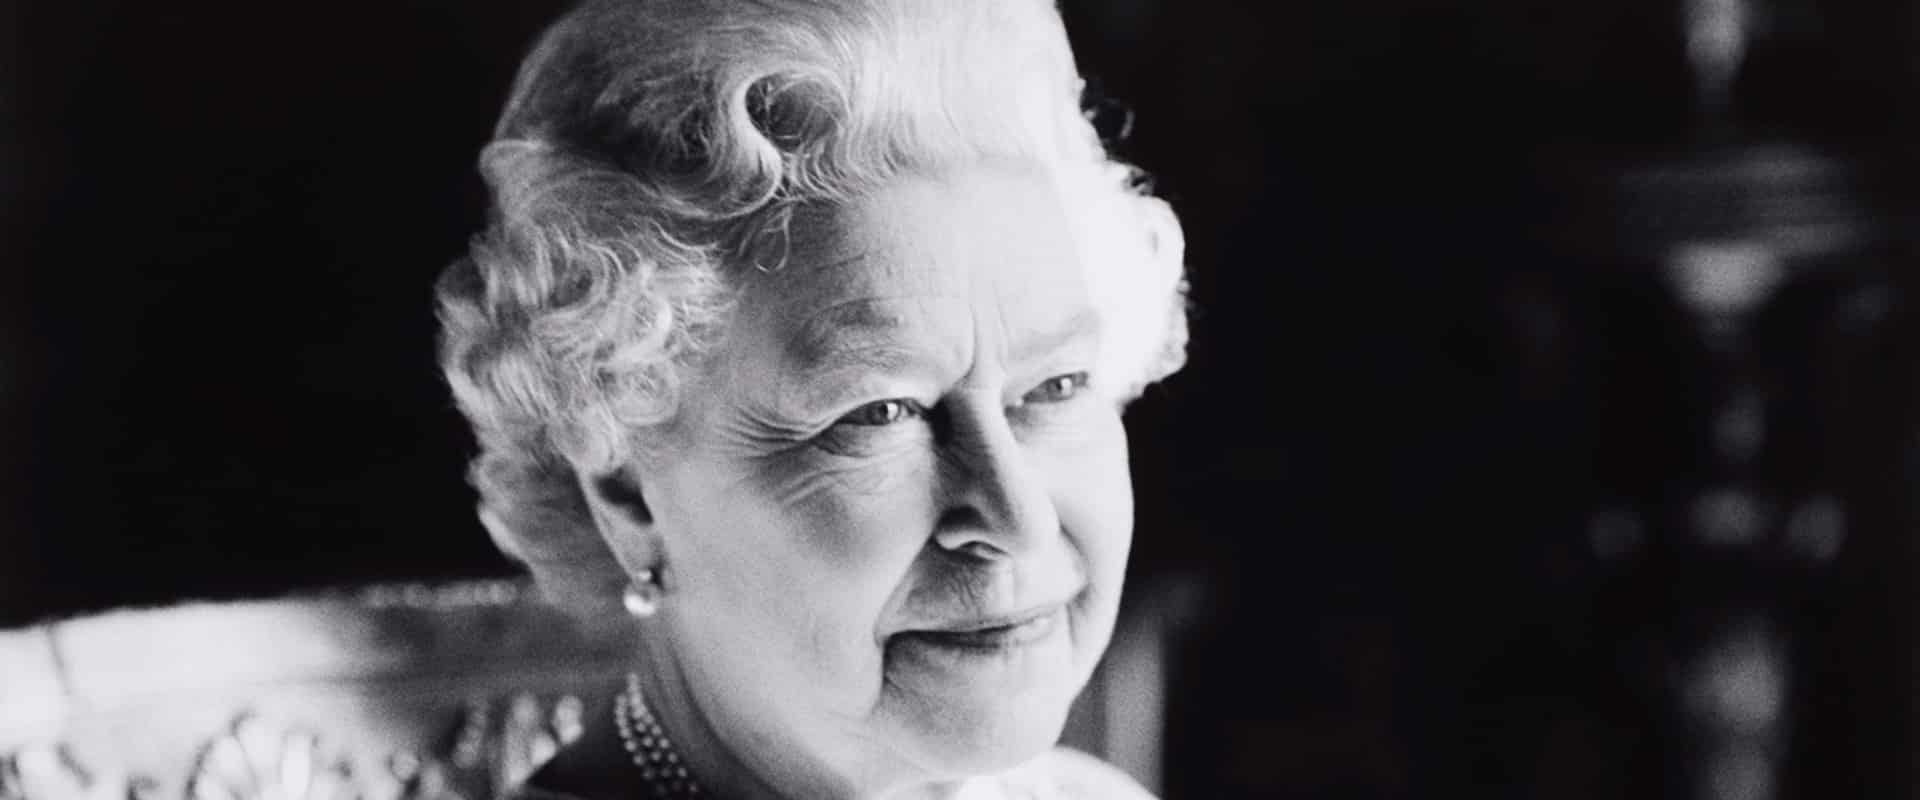 Thank you Her Majesty Queen Elizabeth II